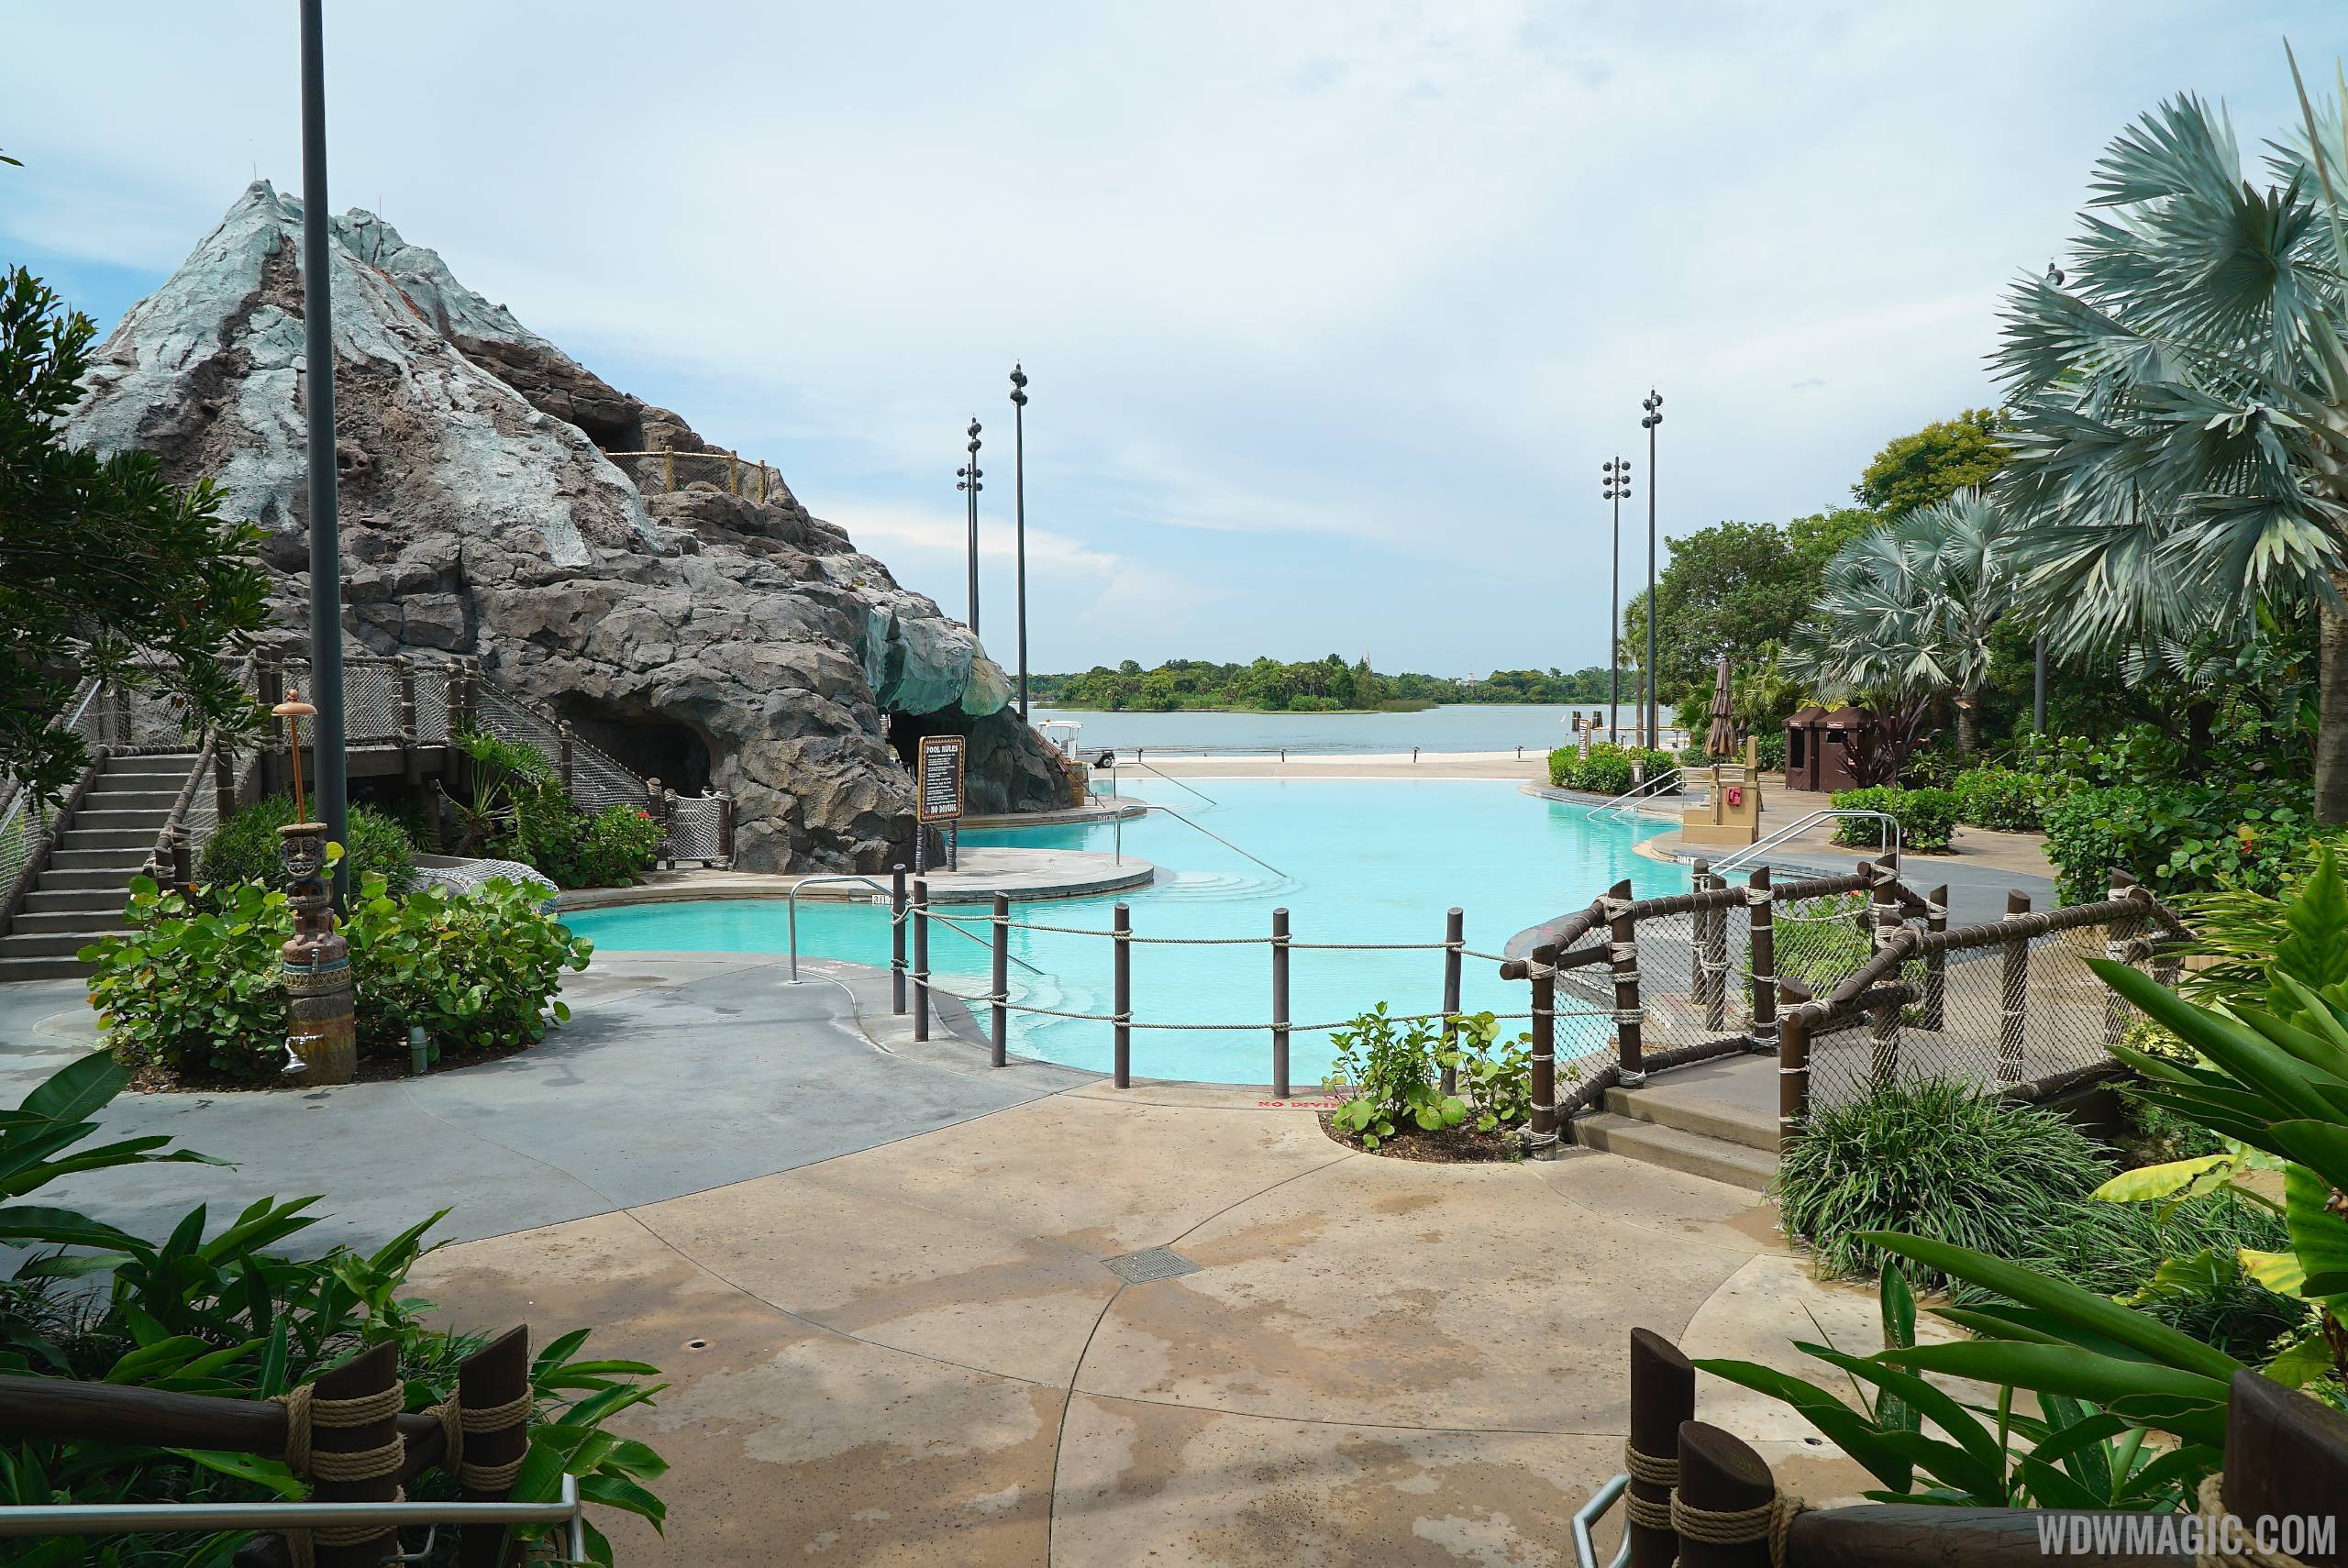 PHOTOS - Nanea Volcano Pool area now closed at Disney's Polynesian Resort